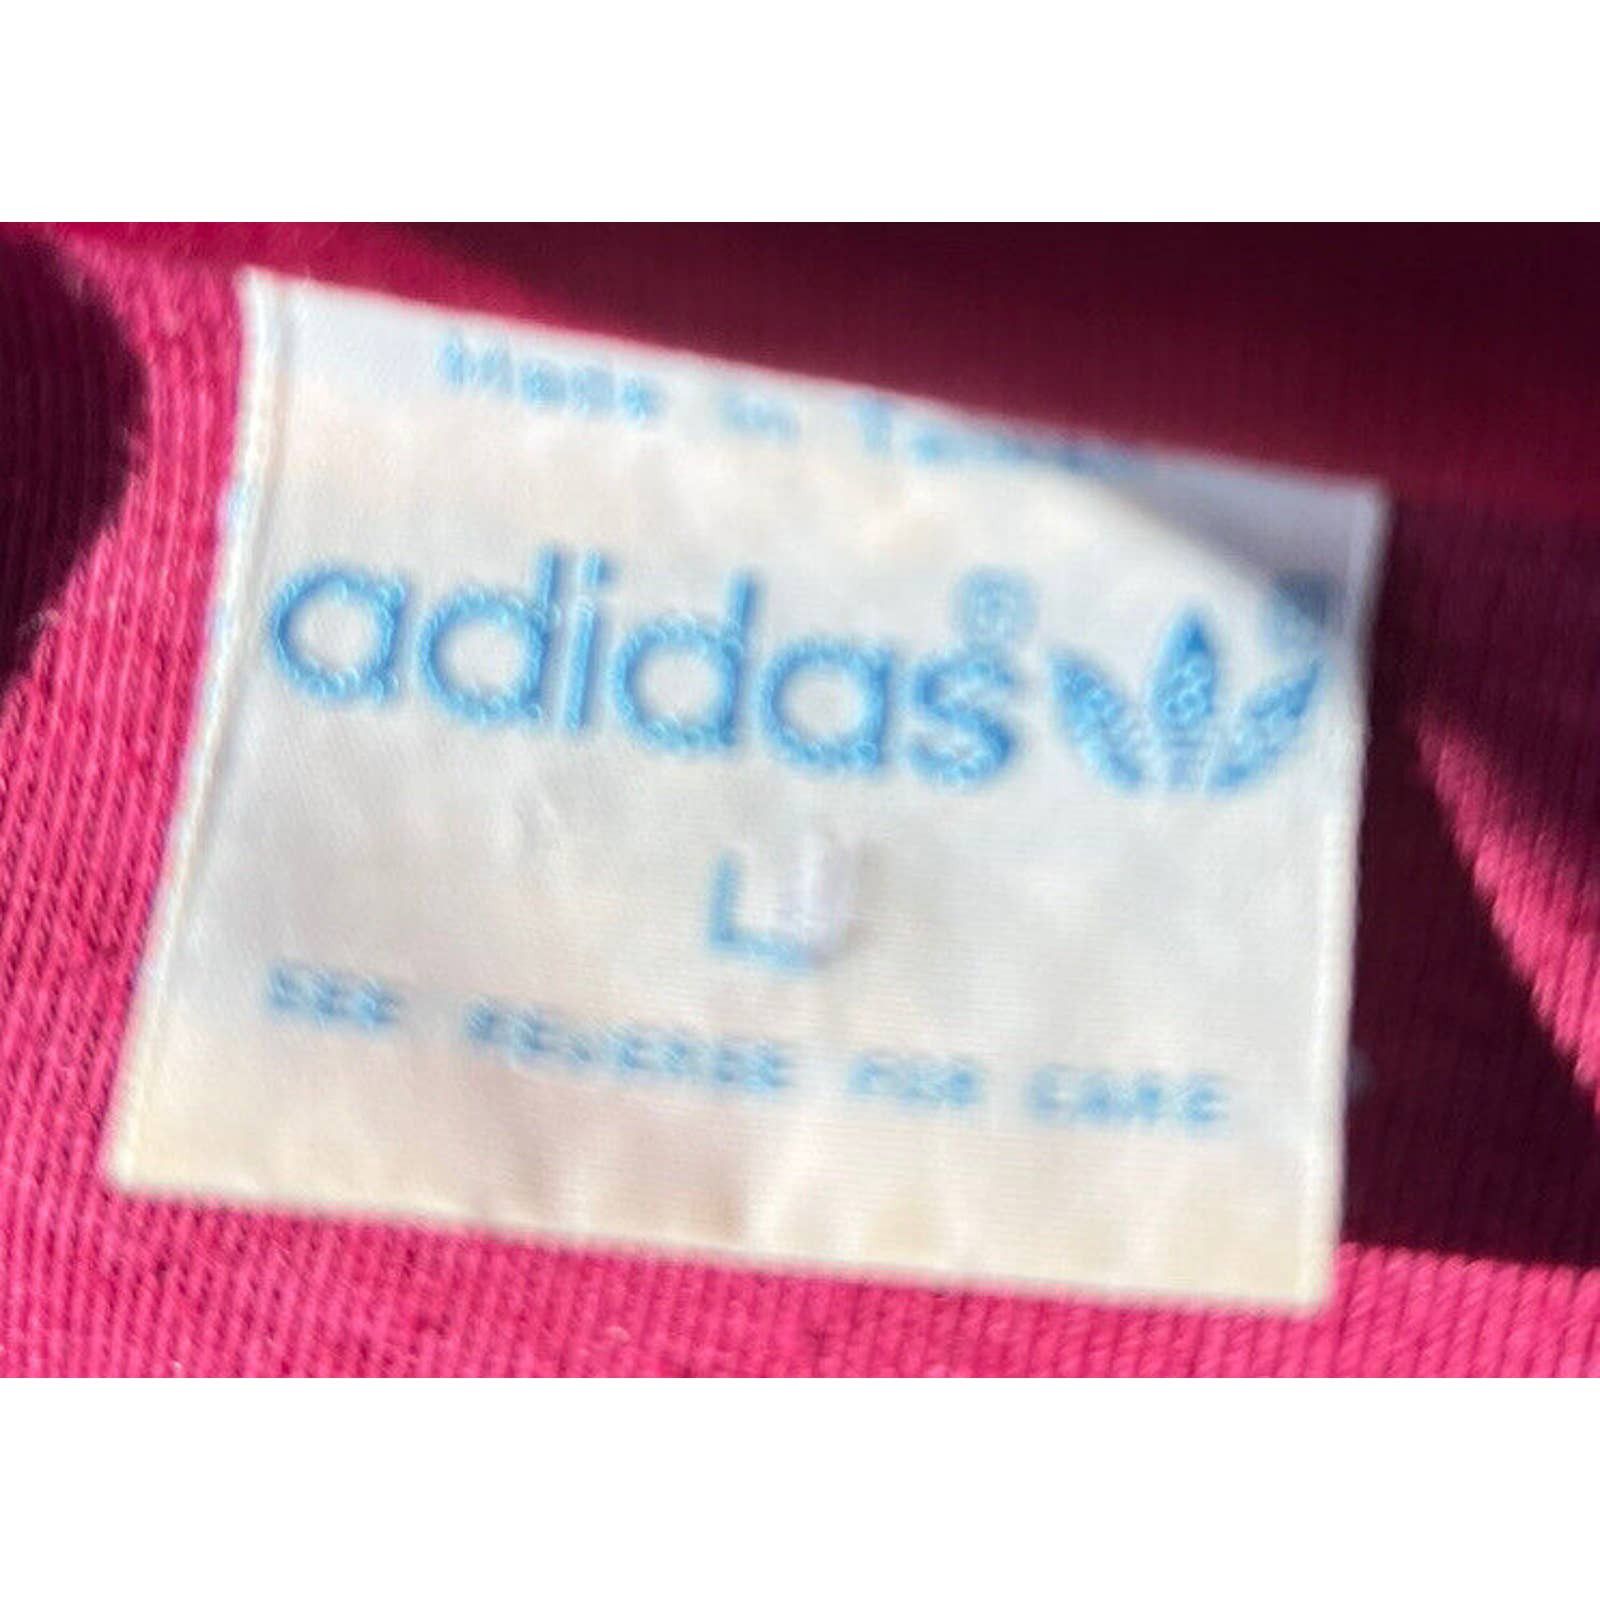 Adidas Vintage 80s Adidas Trefoil Logo Track Jacket Mens Large Red Size US L / EU 52-54 / 3 - 3 Preview